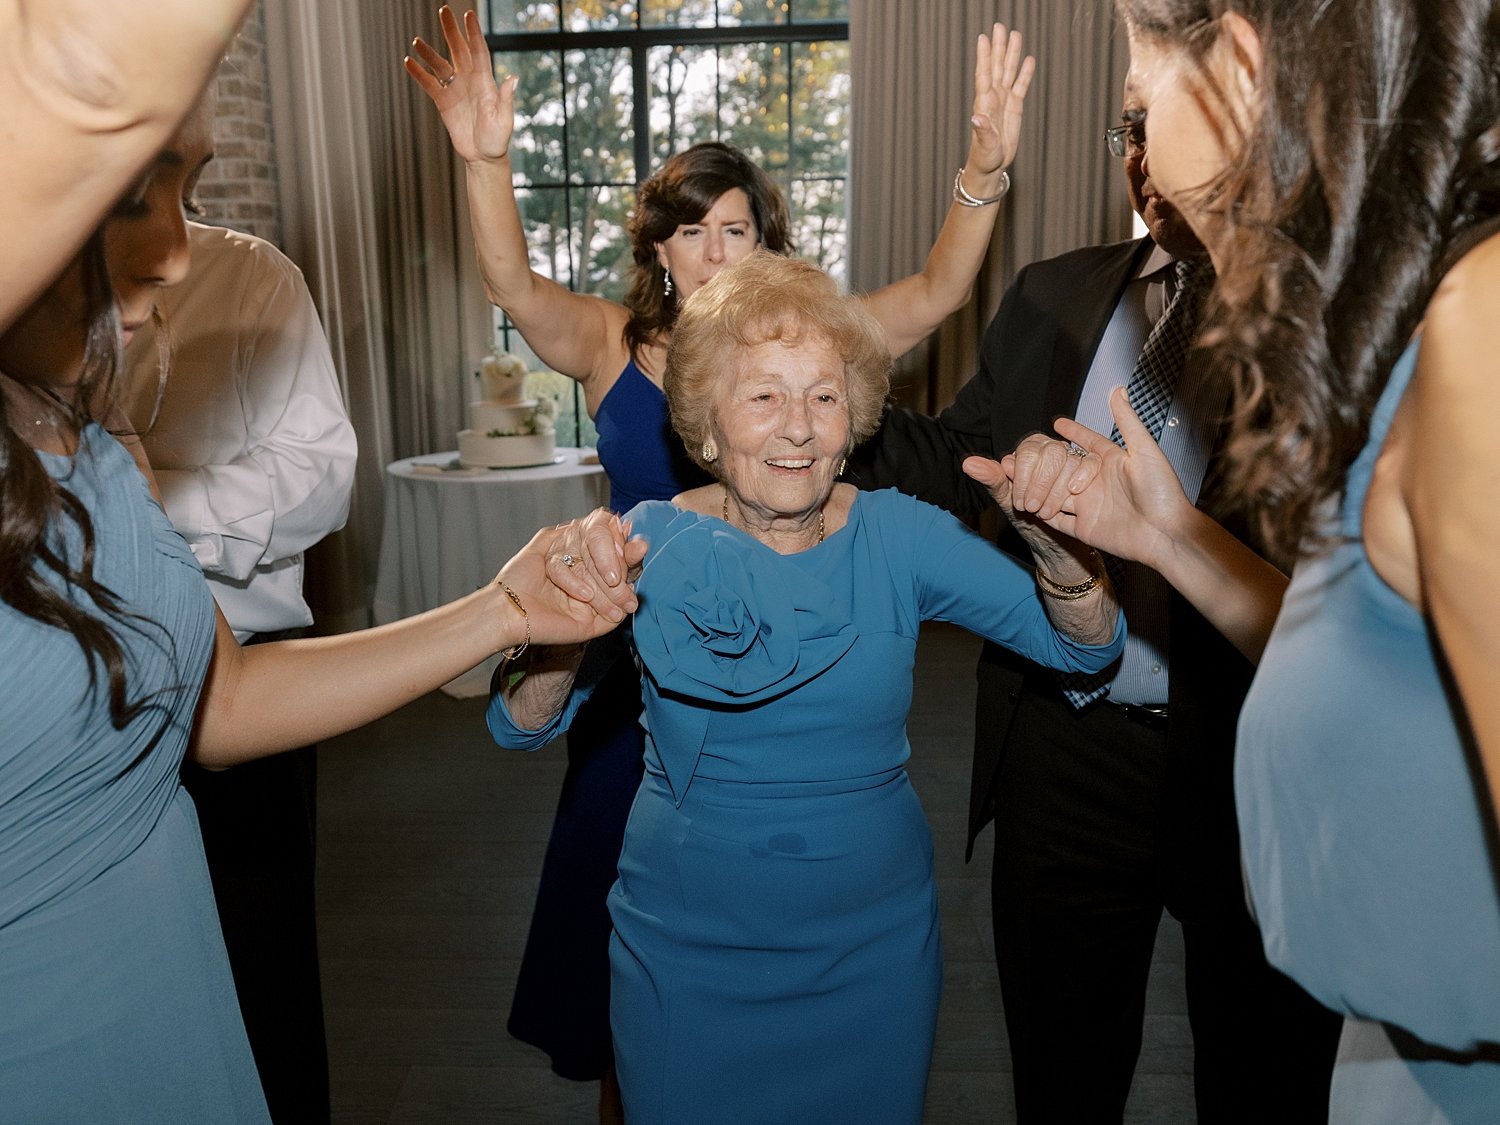 bride dances with grandmother during NJ wedding reception